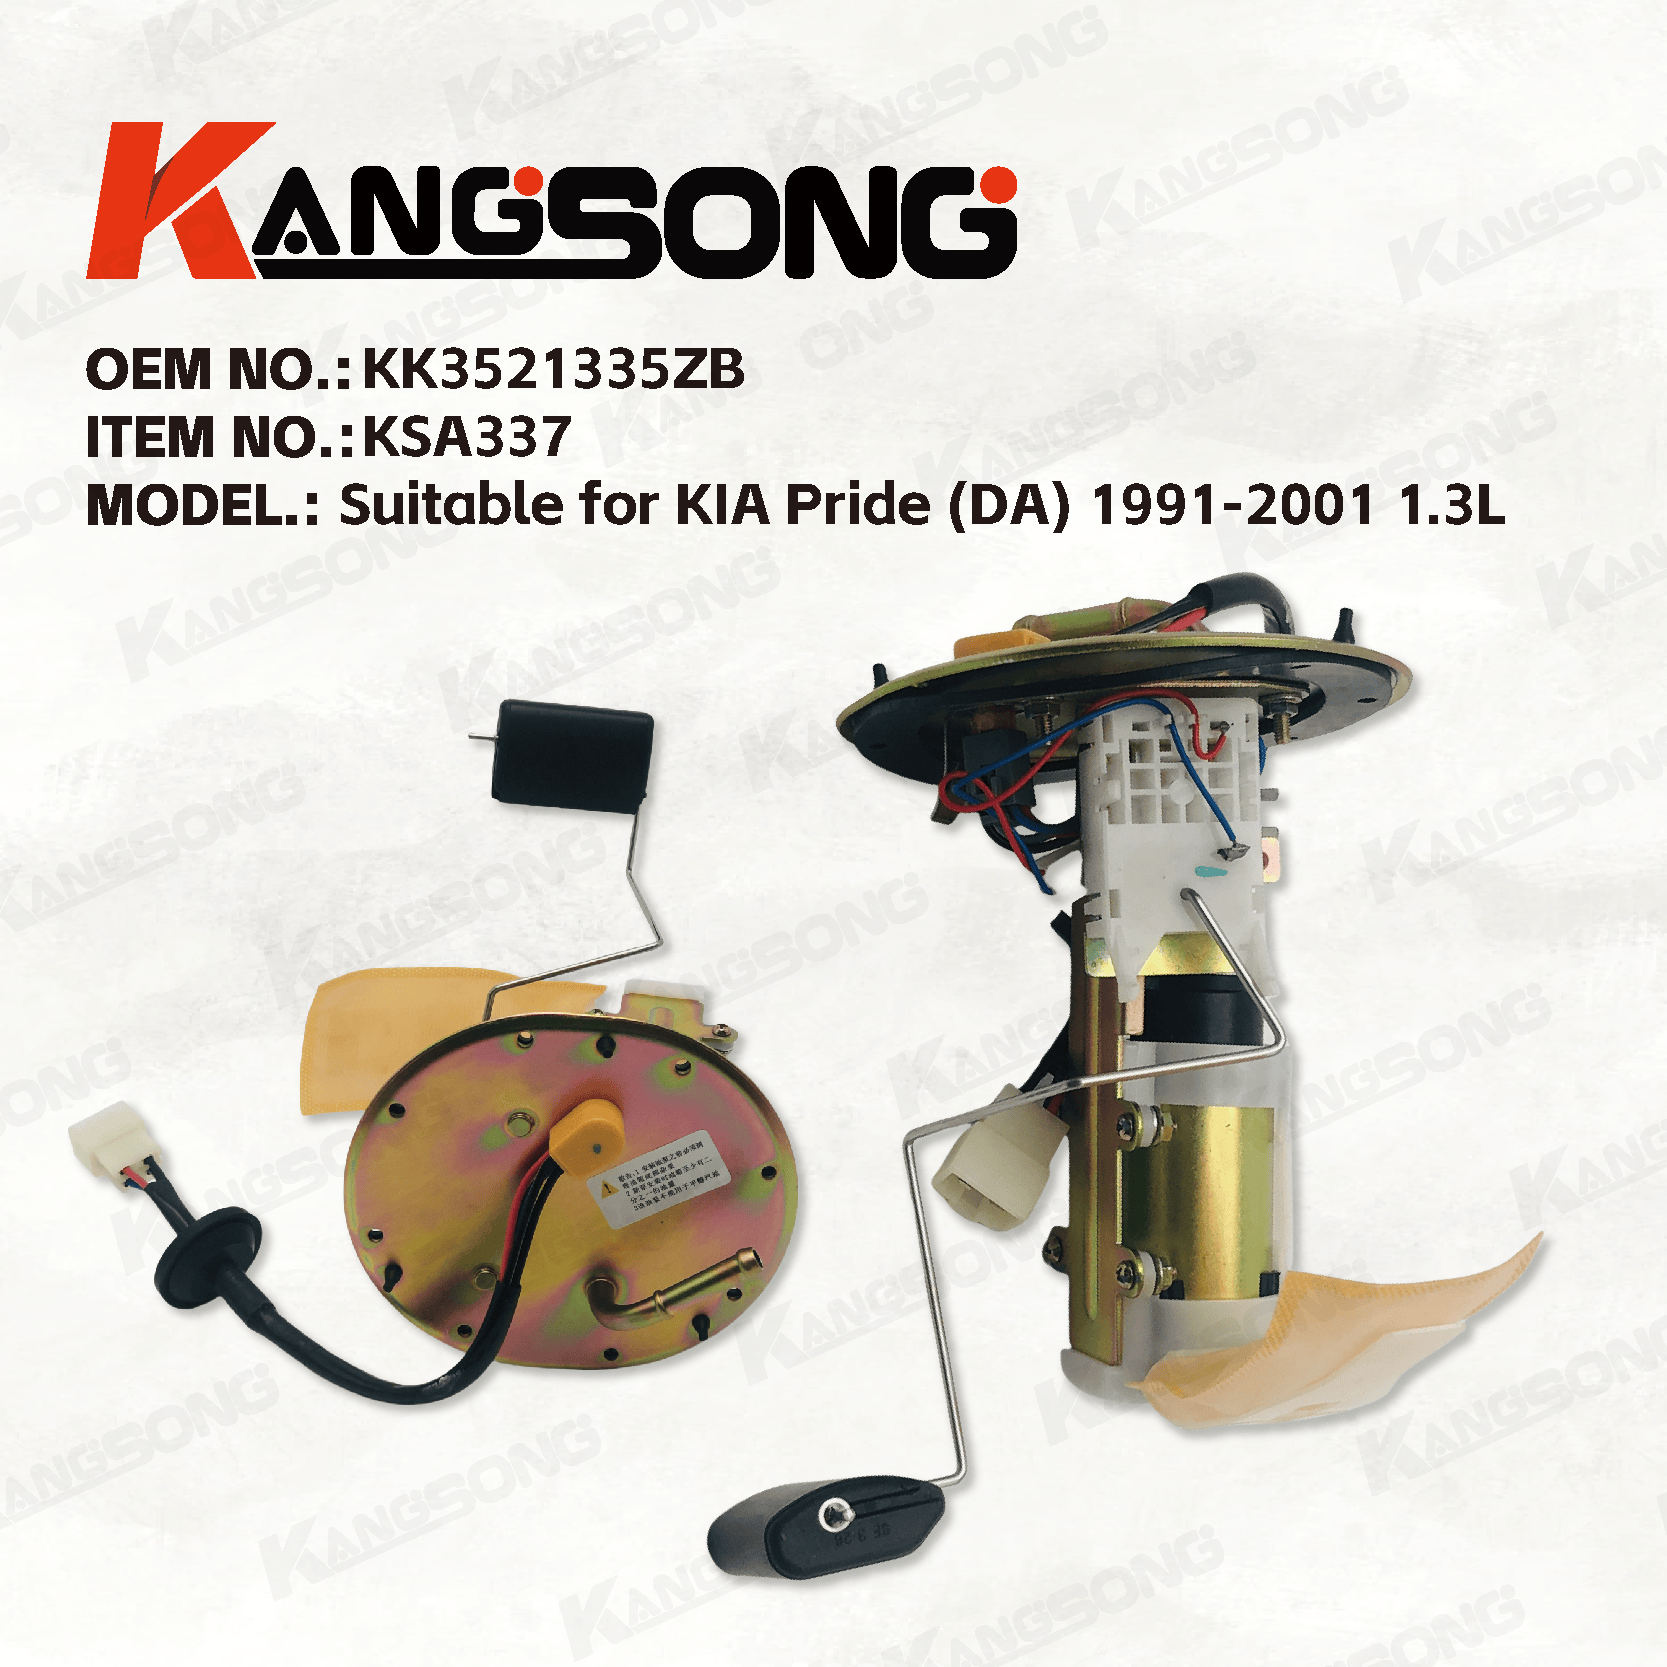 Applicable to KIA Pride (DA) 1991-2001 1.3L  /KK3521335ZB/ Automotive Fuel Pump Assembly